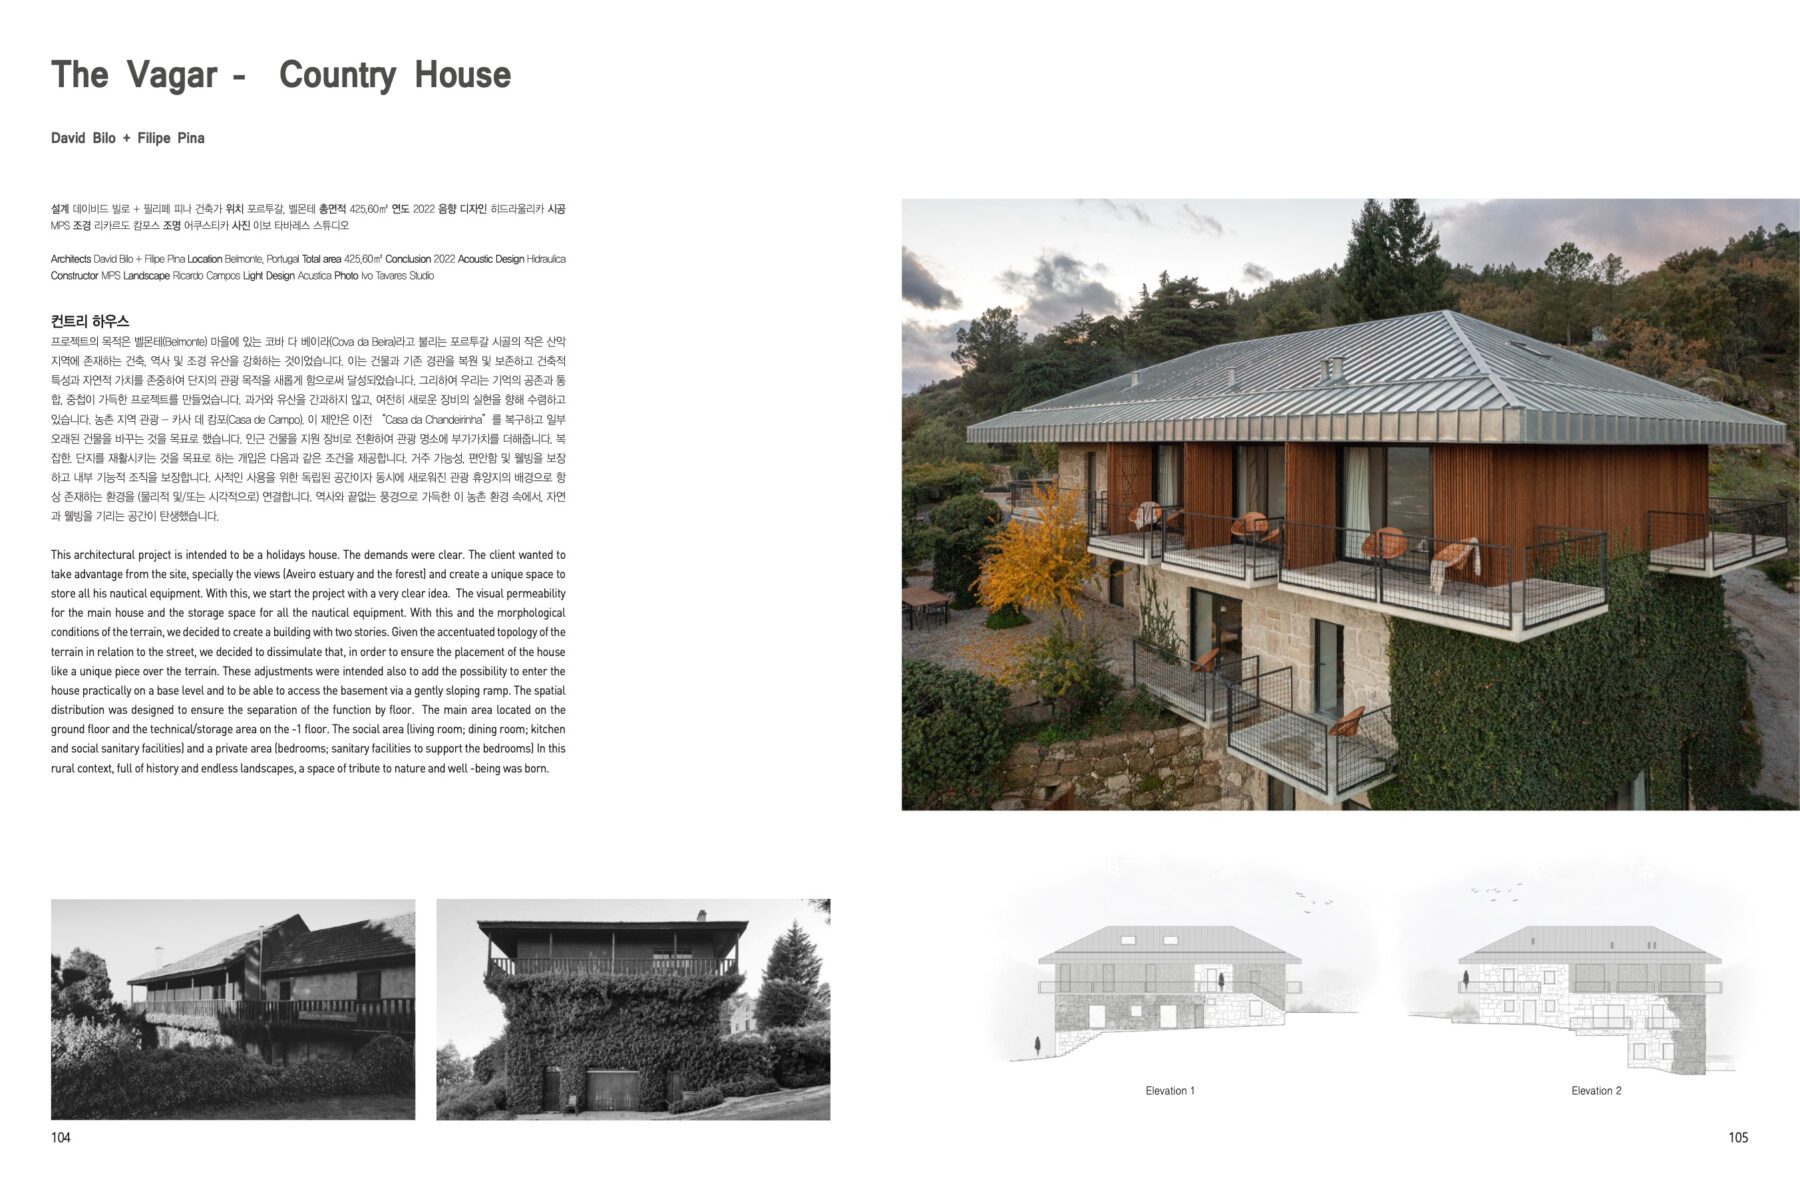 Maru Magazine #237 do atelier Filipe Pina Arquitectura com fotografia arquitetura de ivo tavares studio - architectural photography